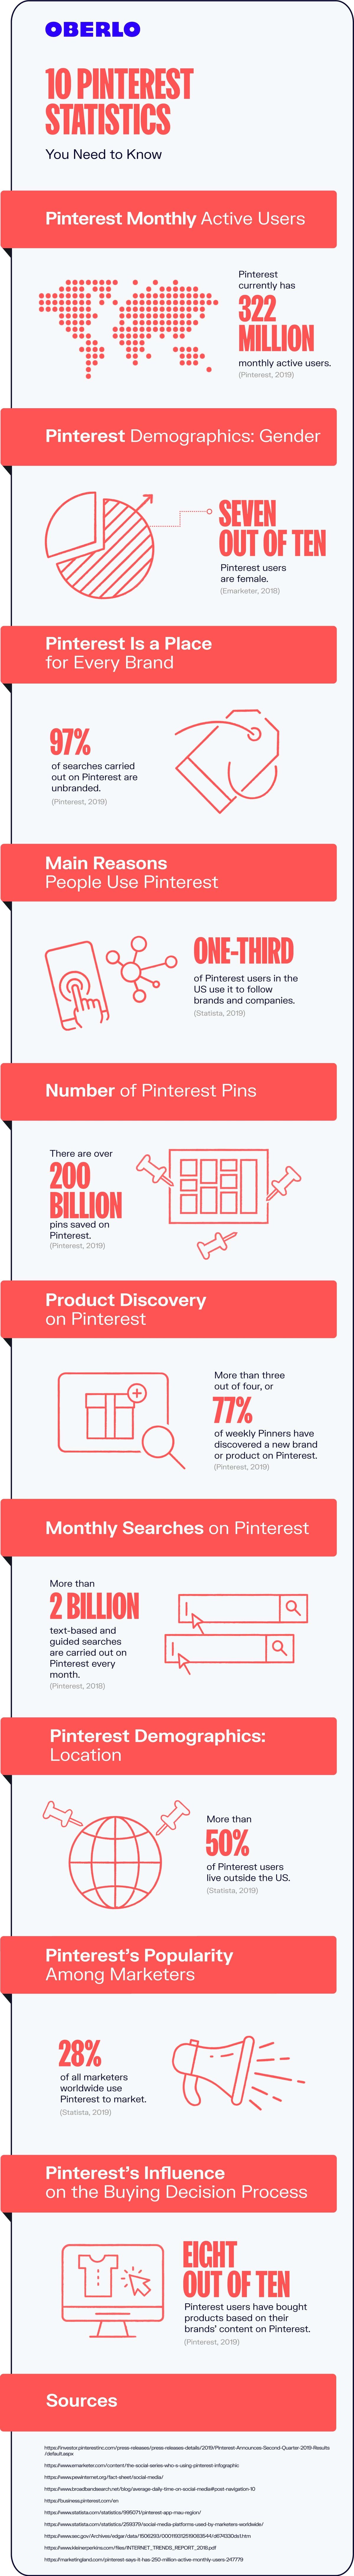 Pinterest-tilastot 2020